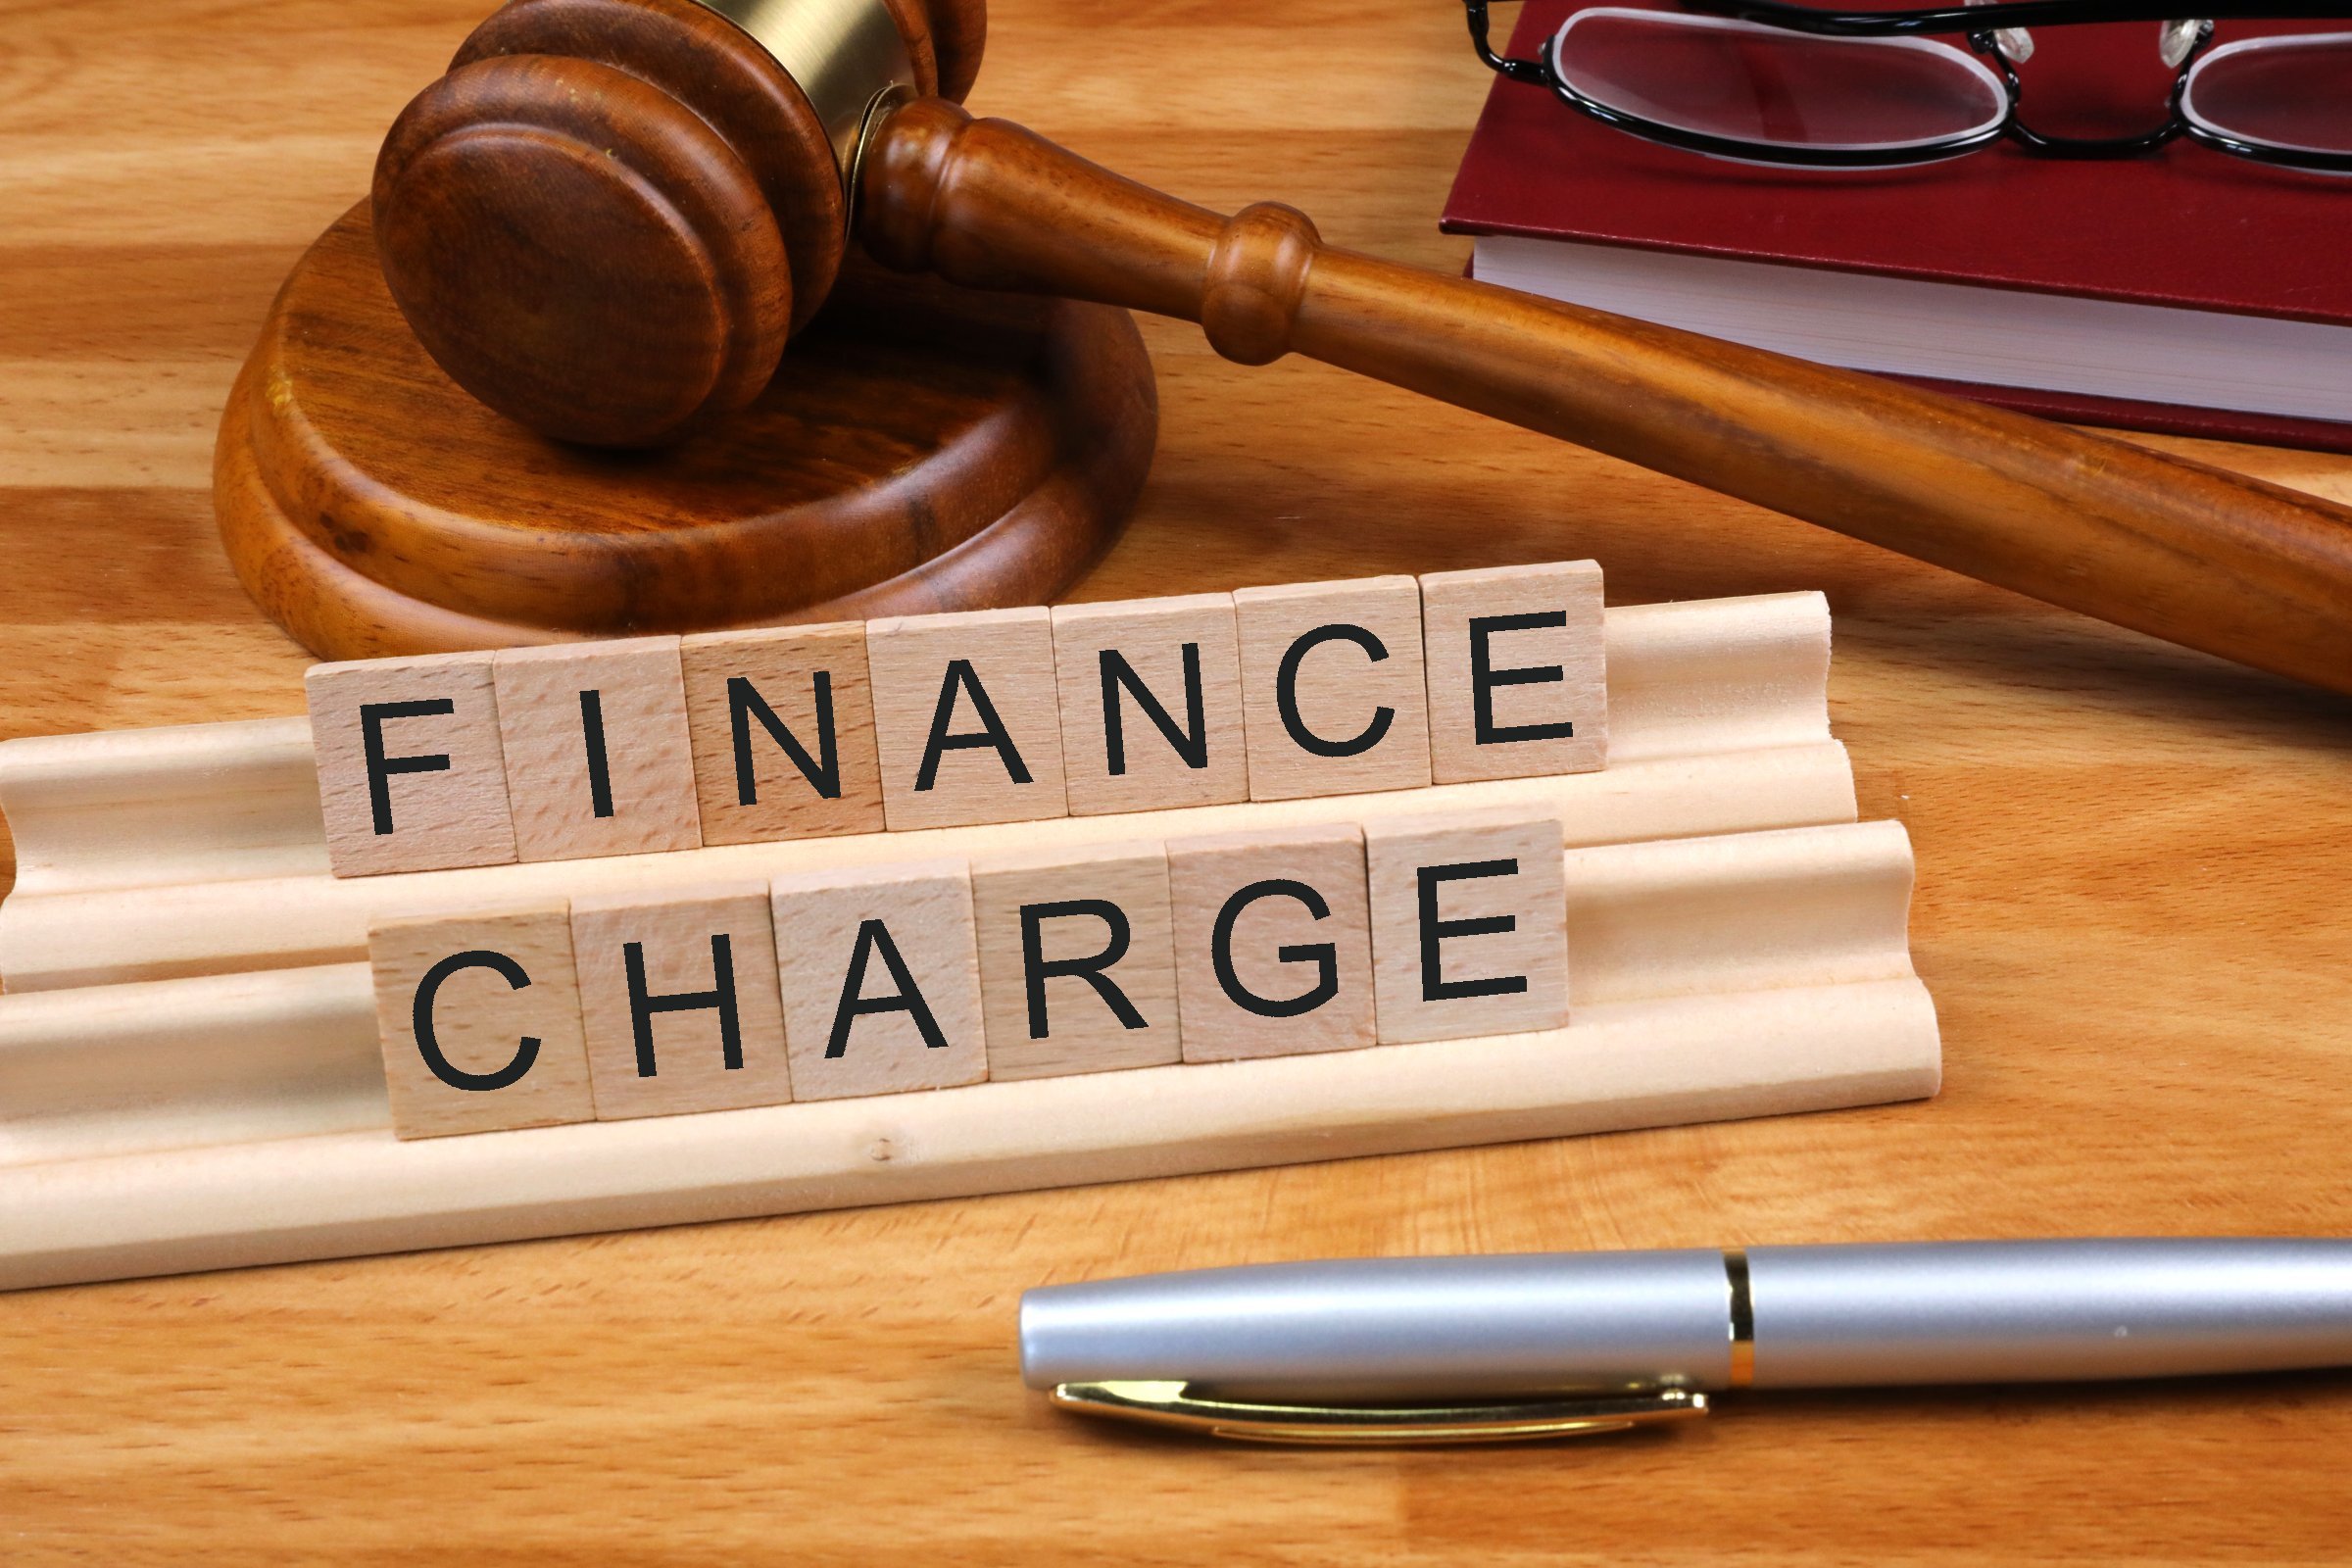 Finance Charge